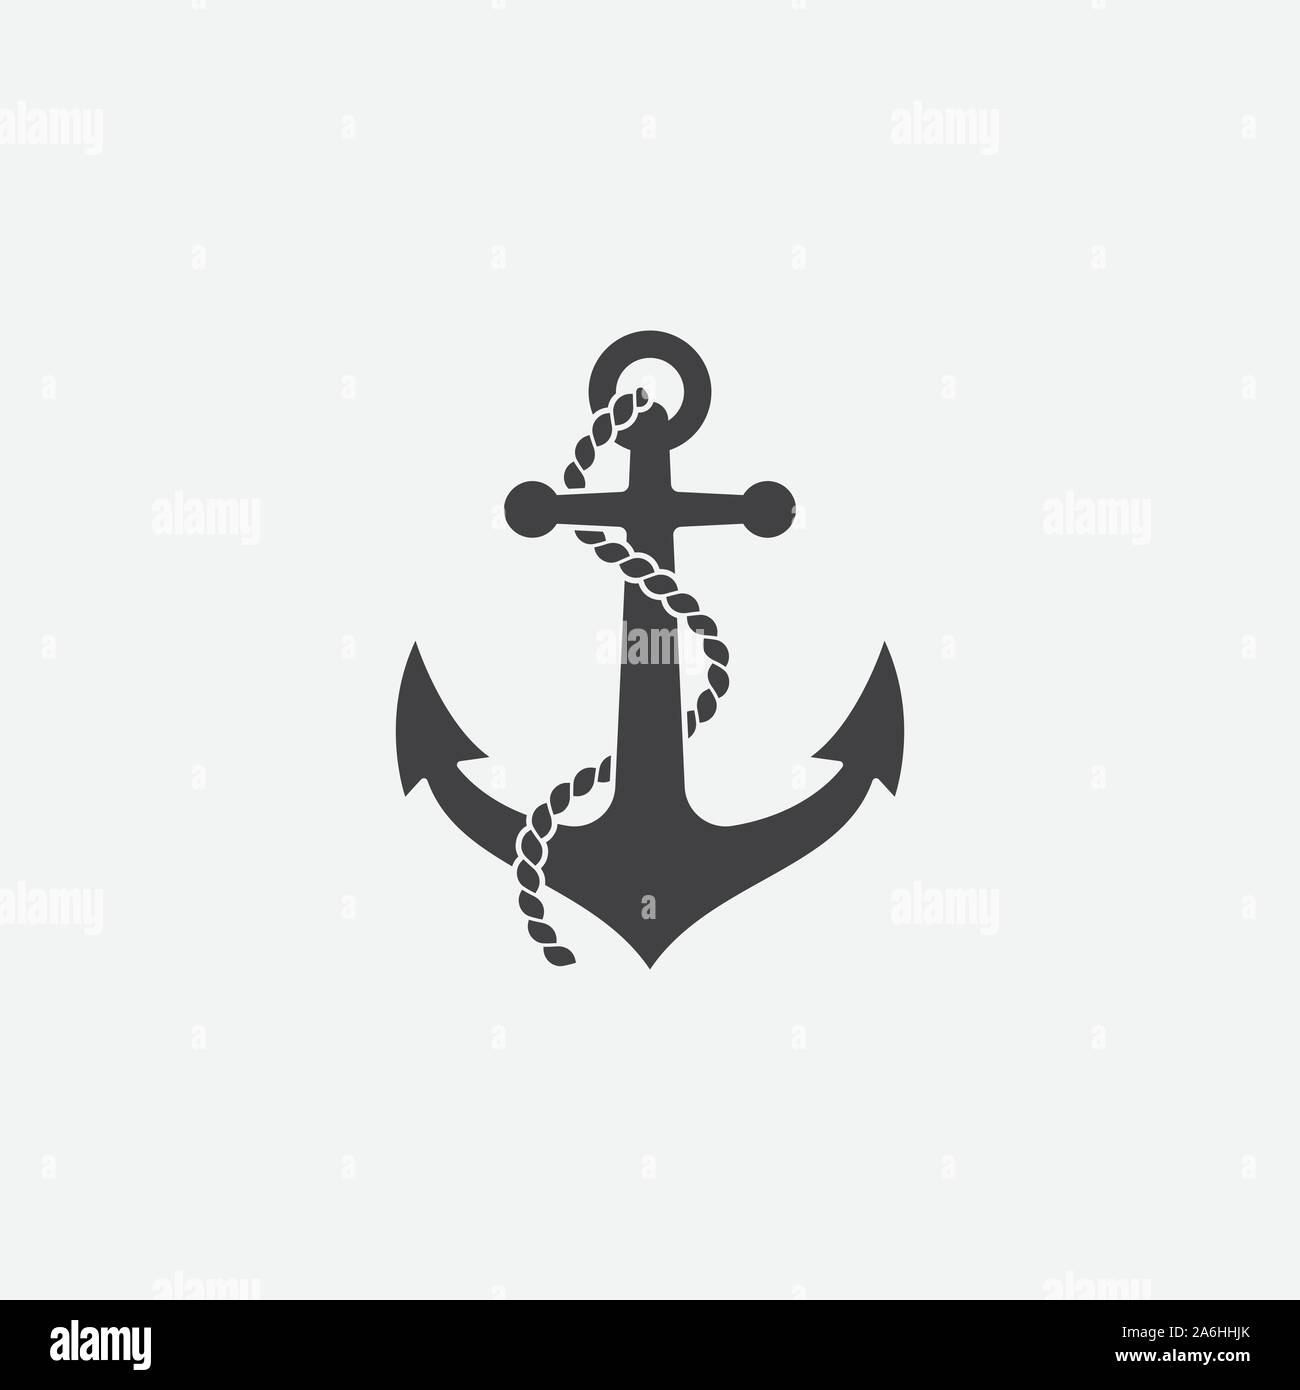 Anchor and rope vector logo icon, Nautical maritime, sea ocean boat illustration symbol, Anchor vector icon, Pirate Nautical maritime boat, Anchor icon, Simple vector icon Stock Vector